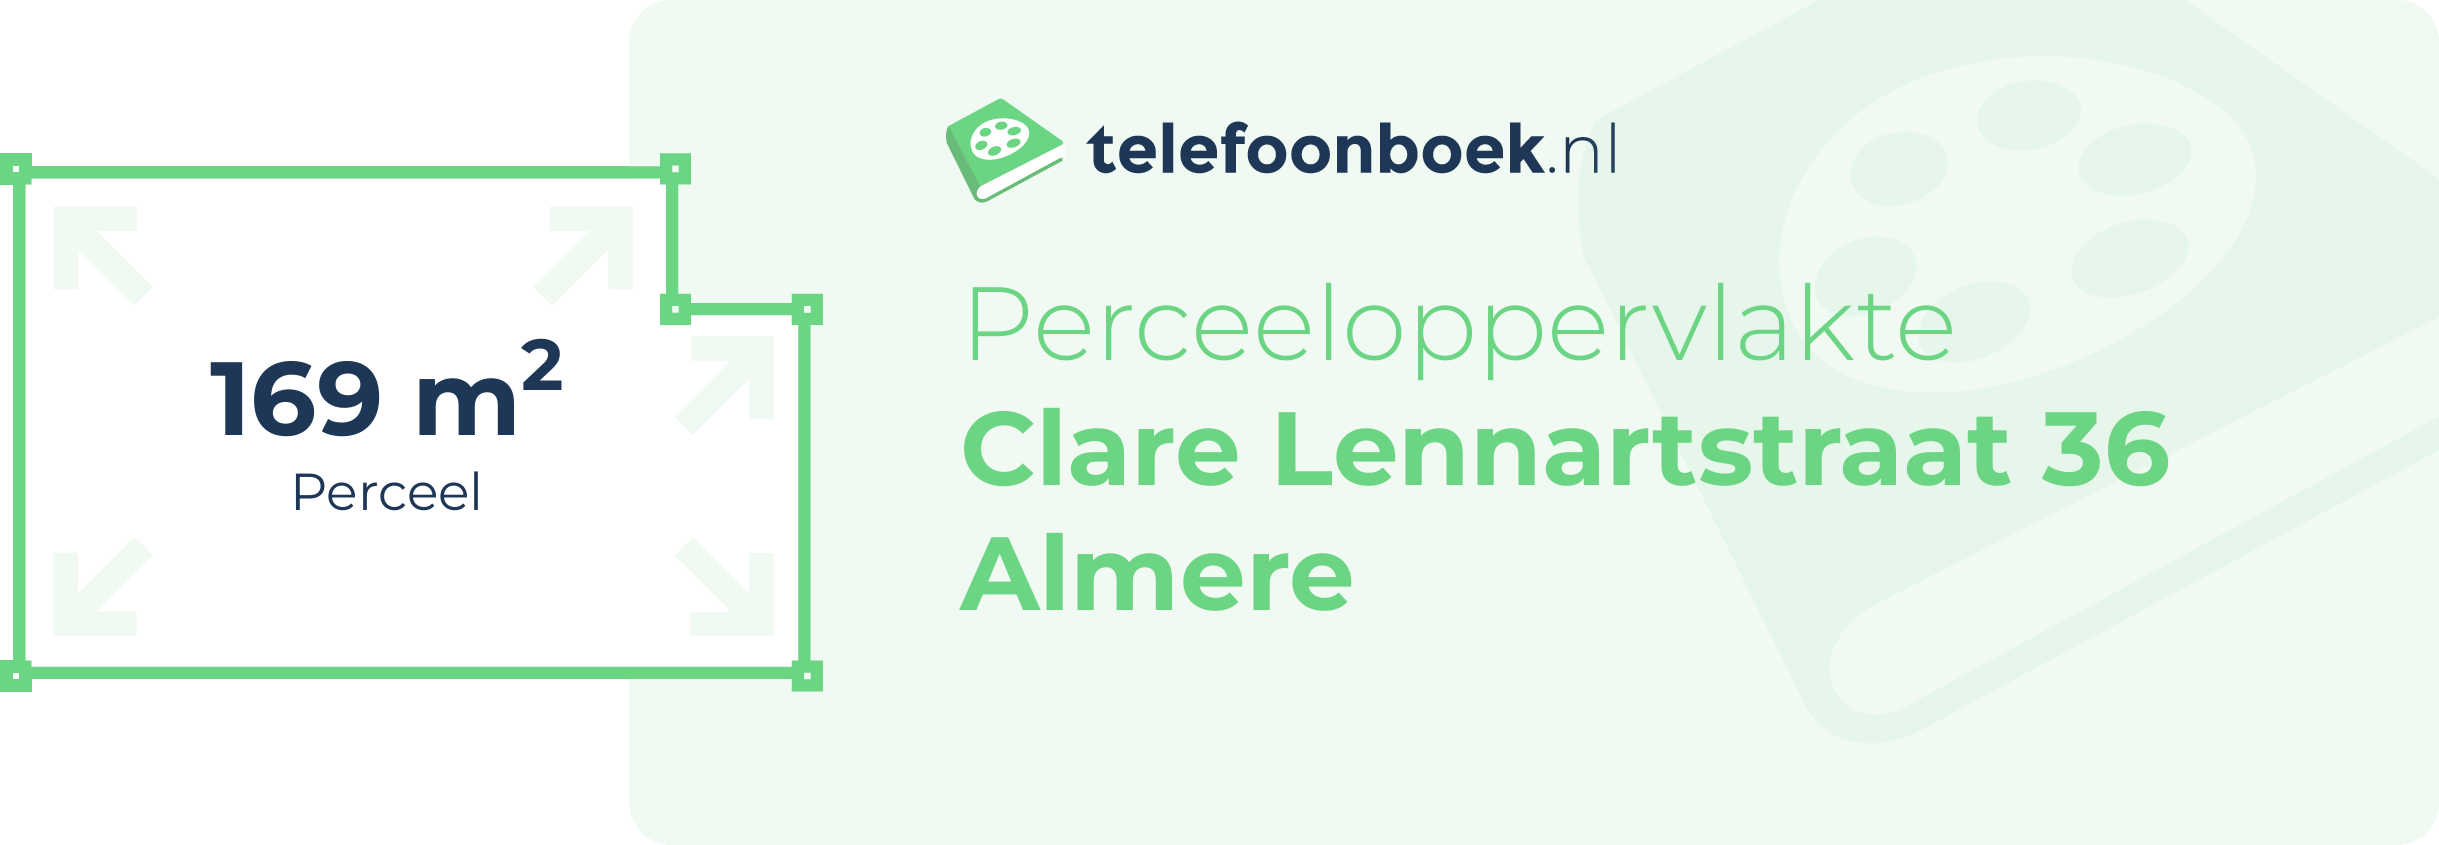 Perceeloppervlakte Clare Lennartstraat 36 Almere